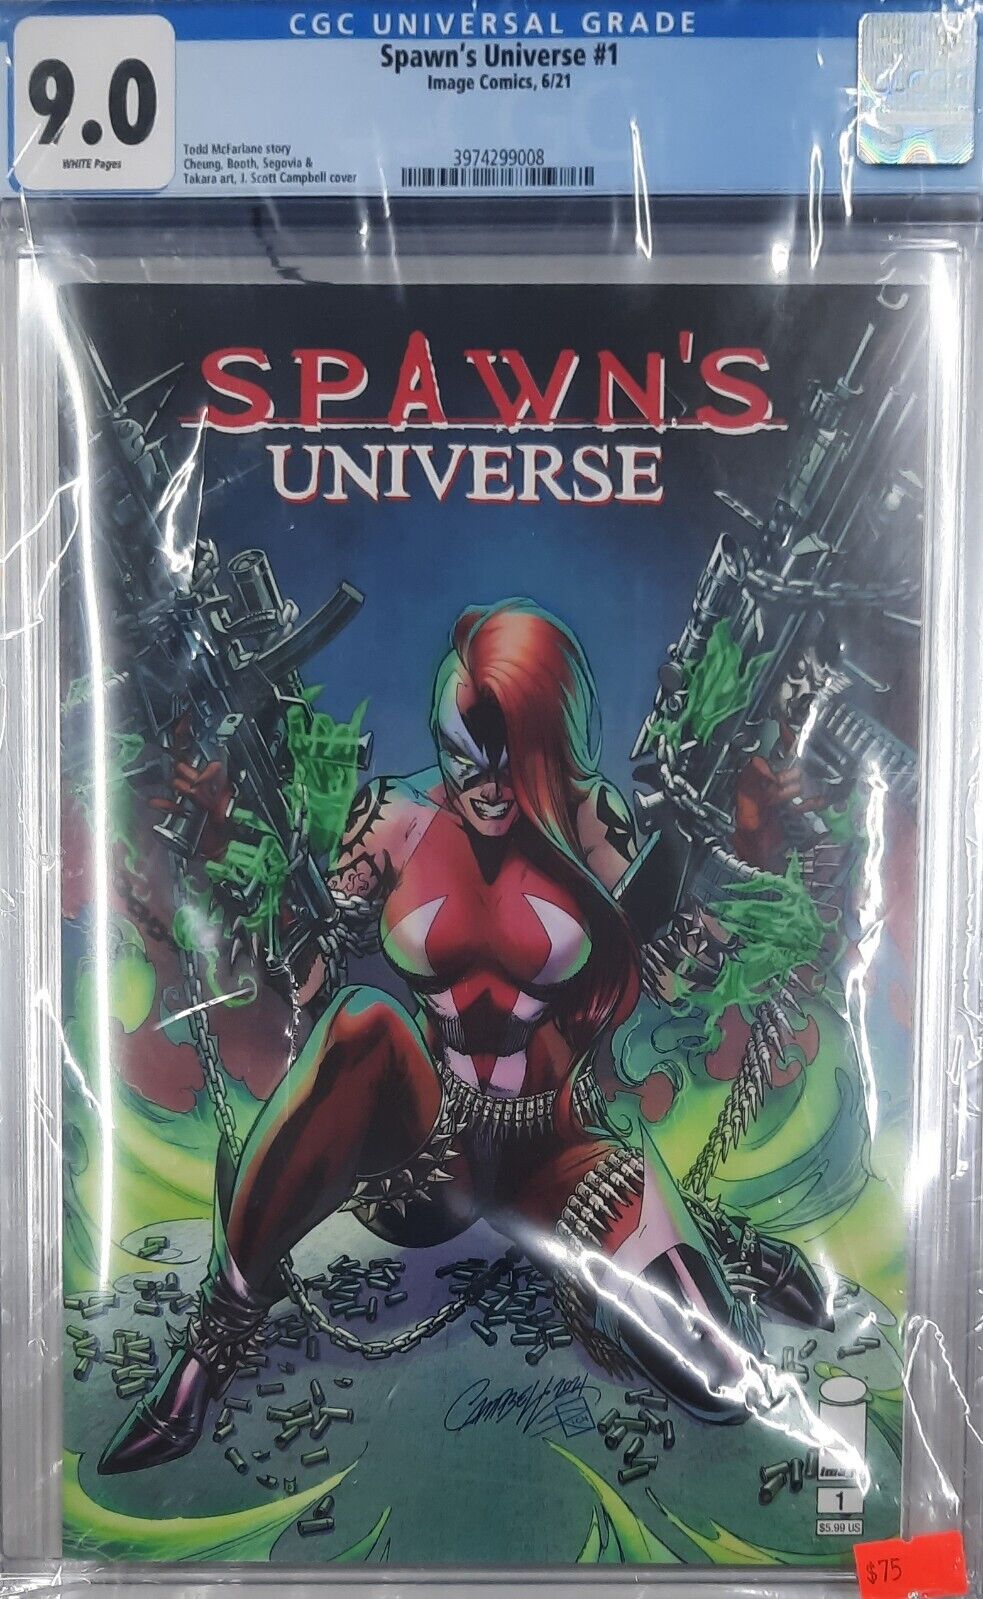 CGC 9.0 Spawn's Universe #1 Image Comics, 6/21